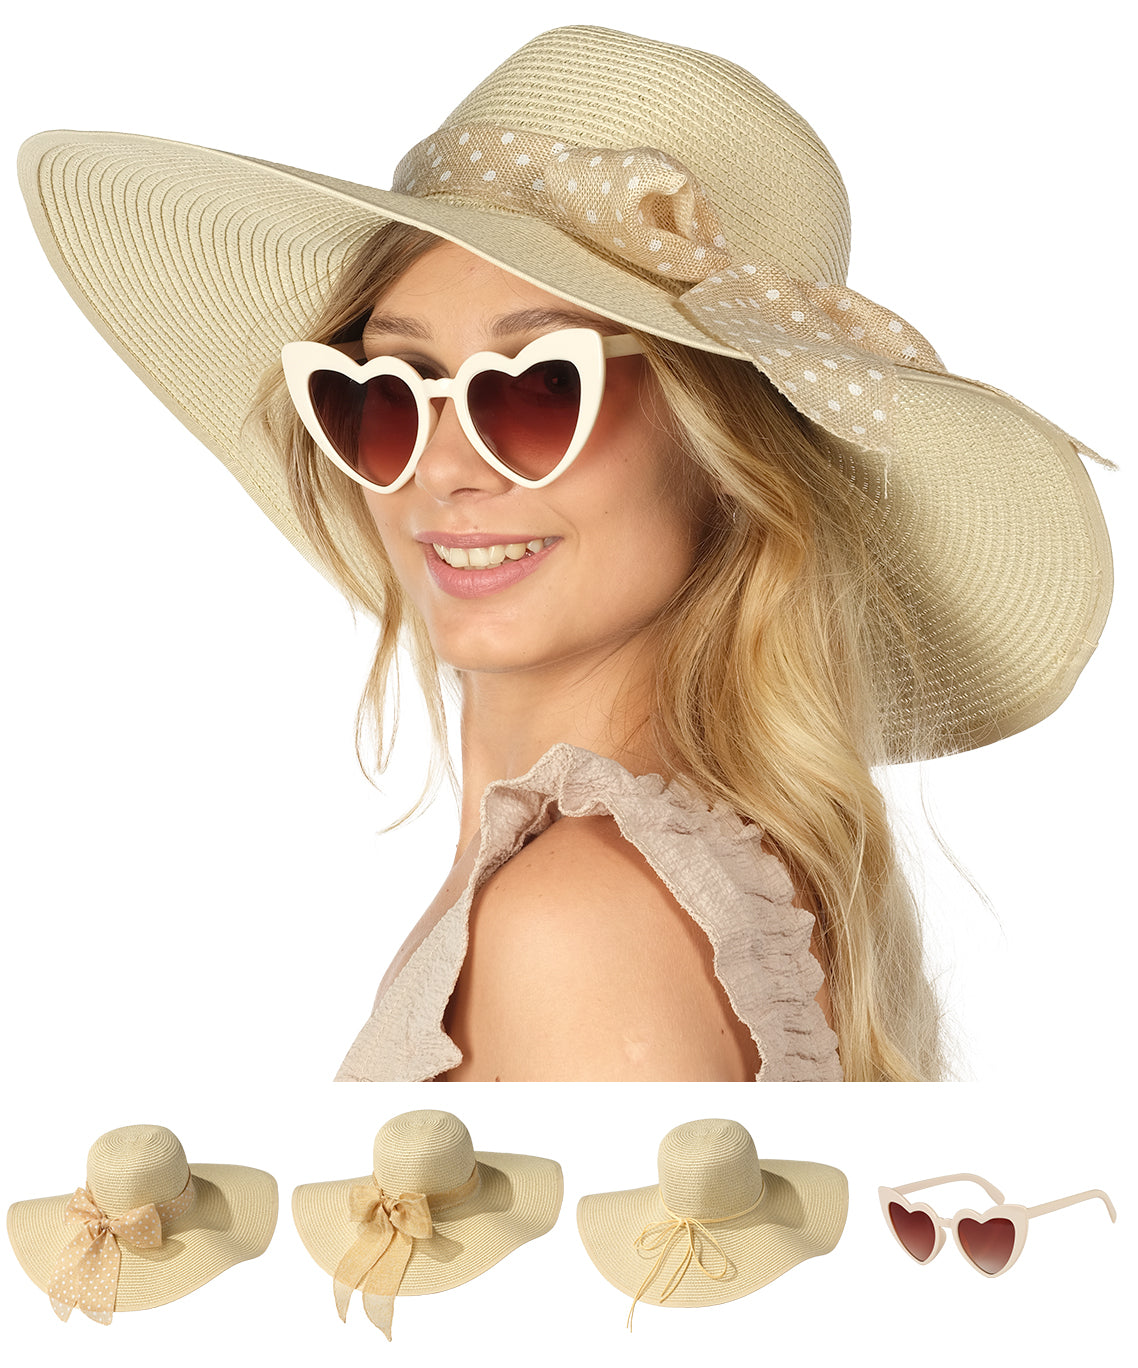 New Female Sombreros Women Summer Hat Classic Panama Sunhats Beach